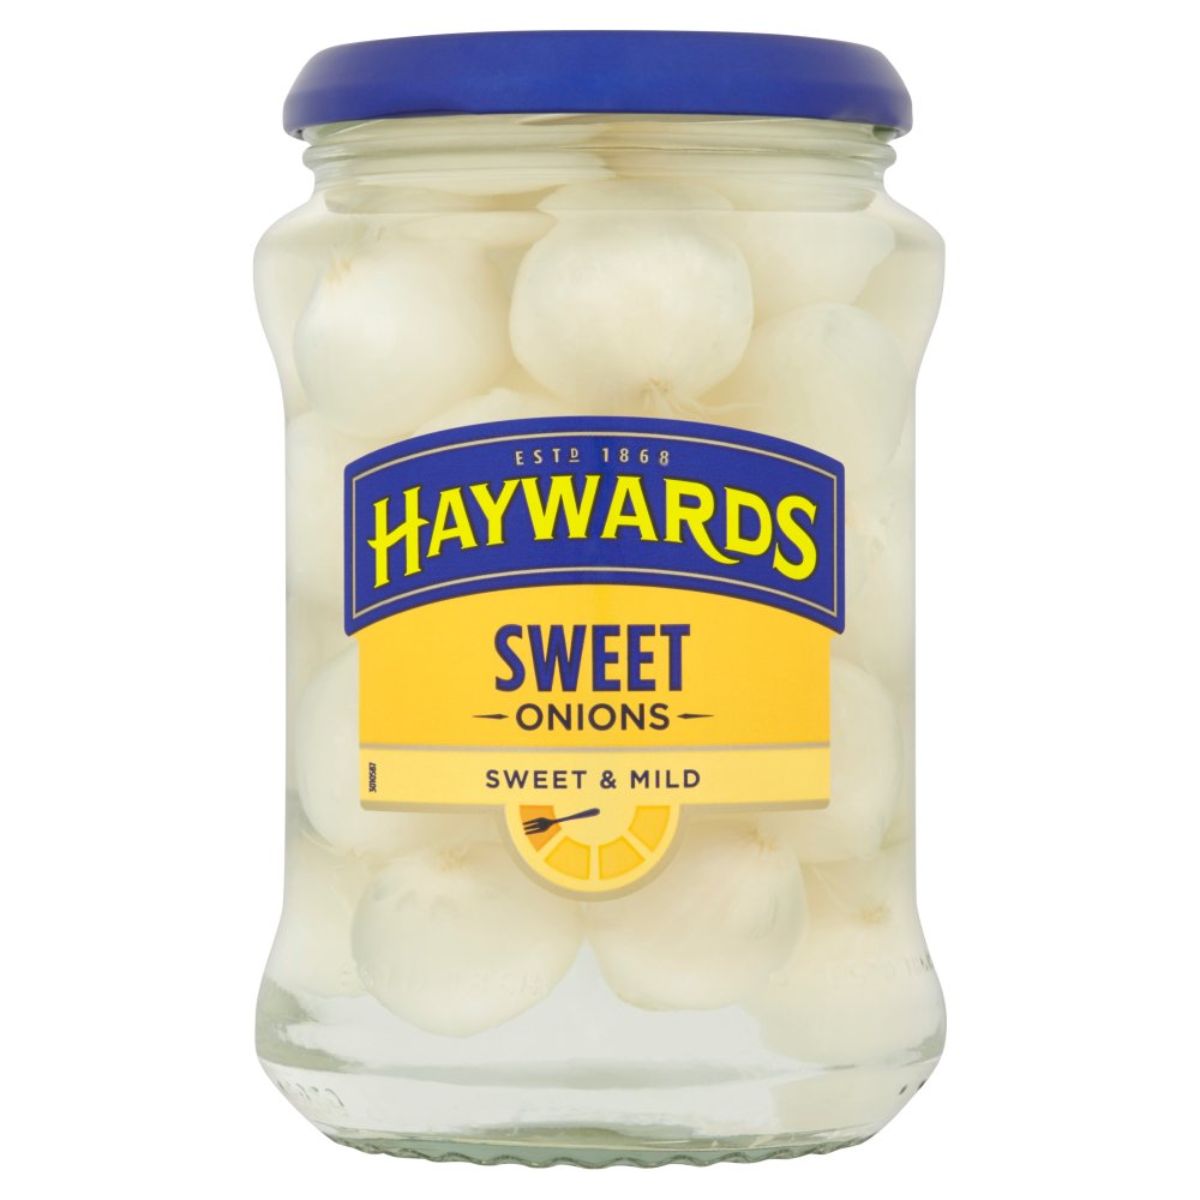 Haywards - Sweet Onions - 400g in a jar.